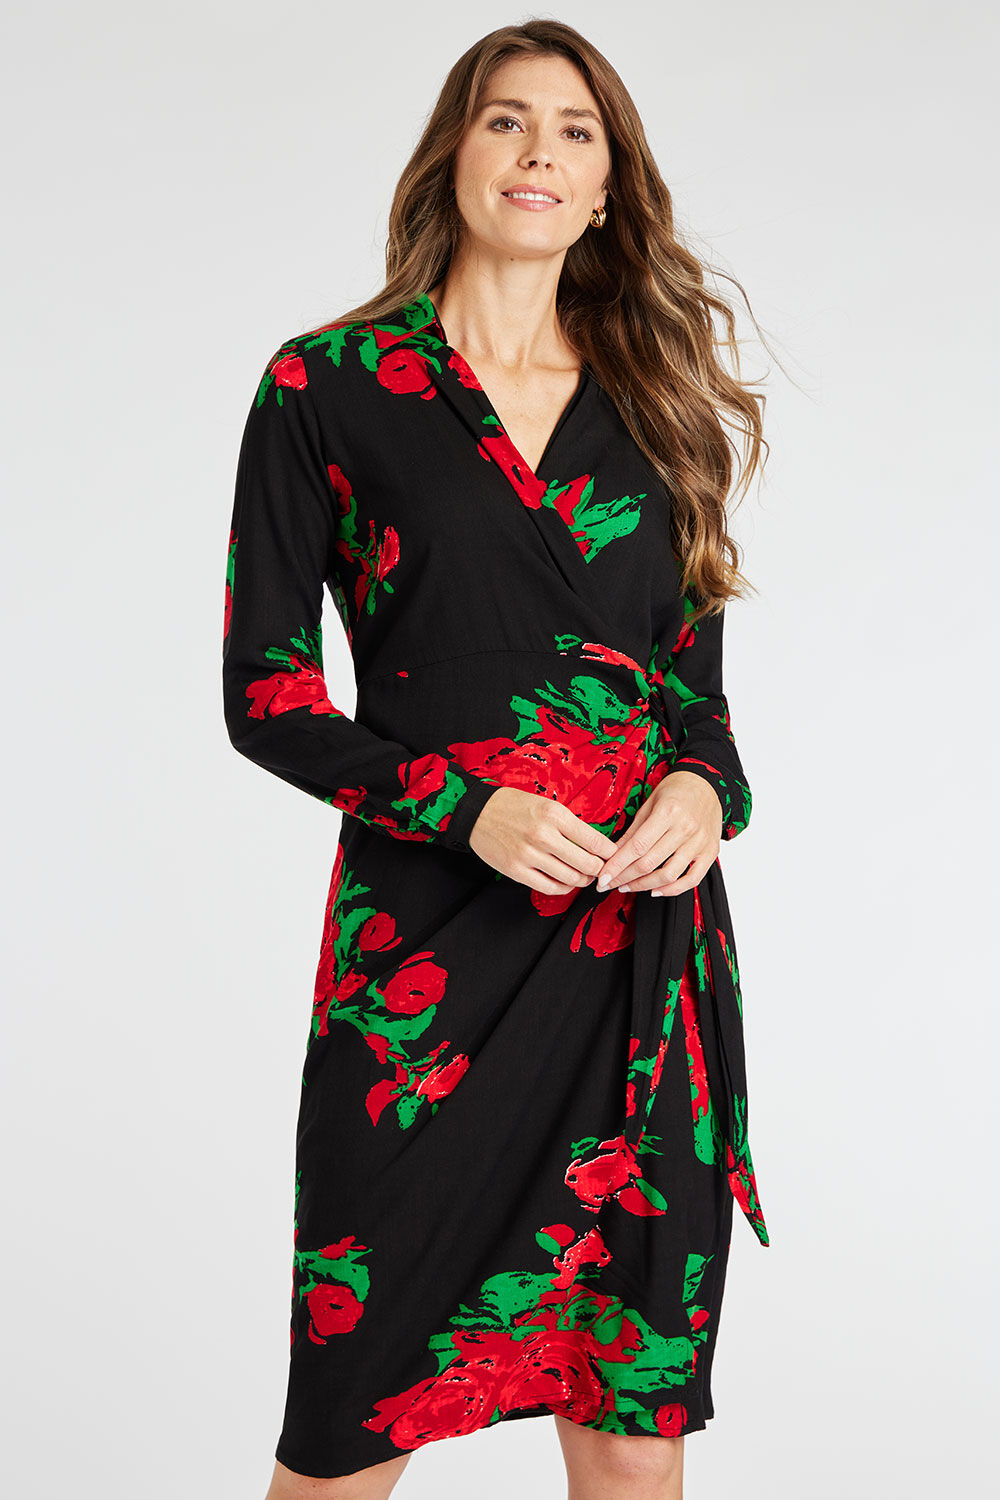 Bonmarche Black Rose Print Wrap Front Dress, Size: 10